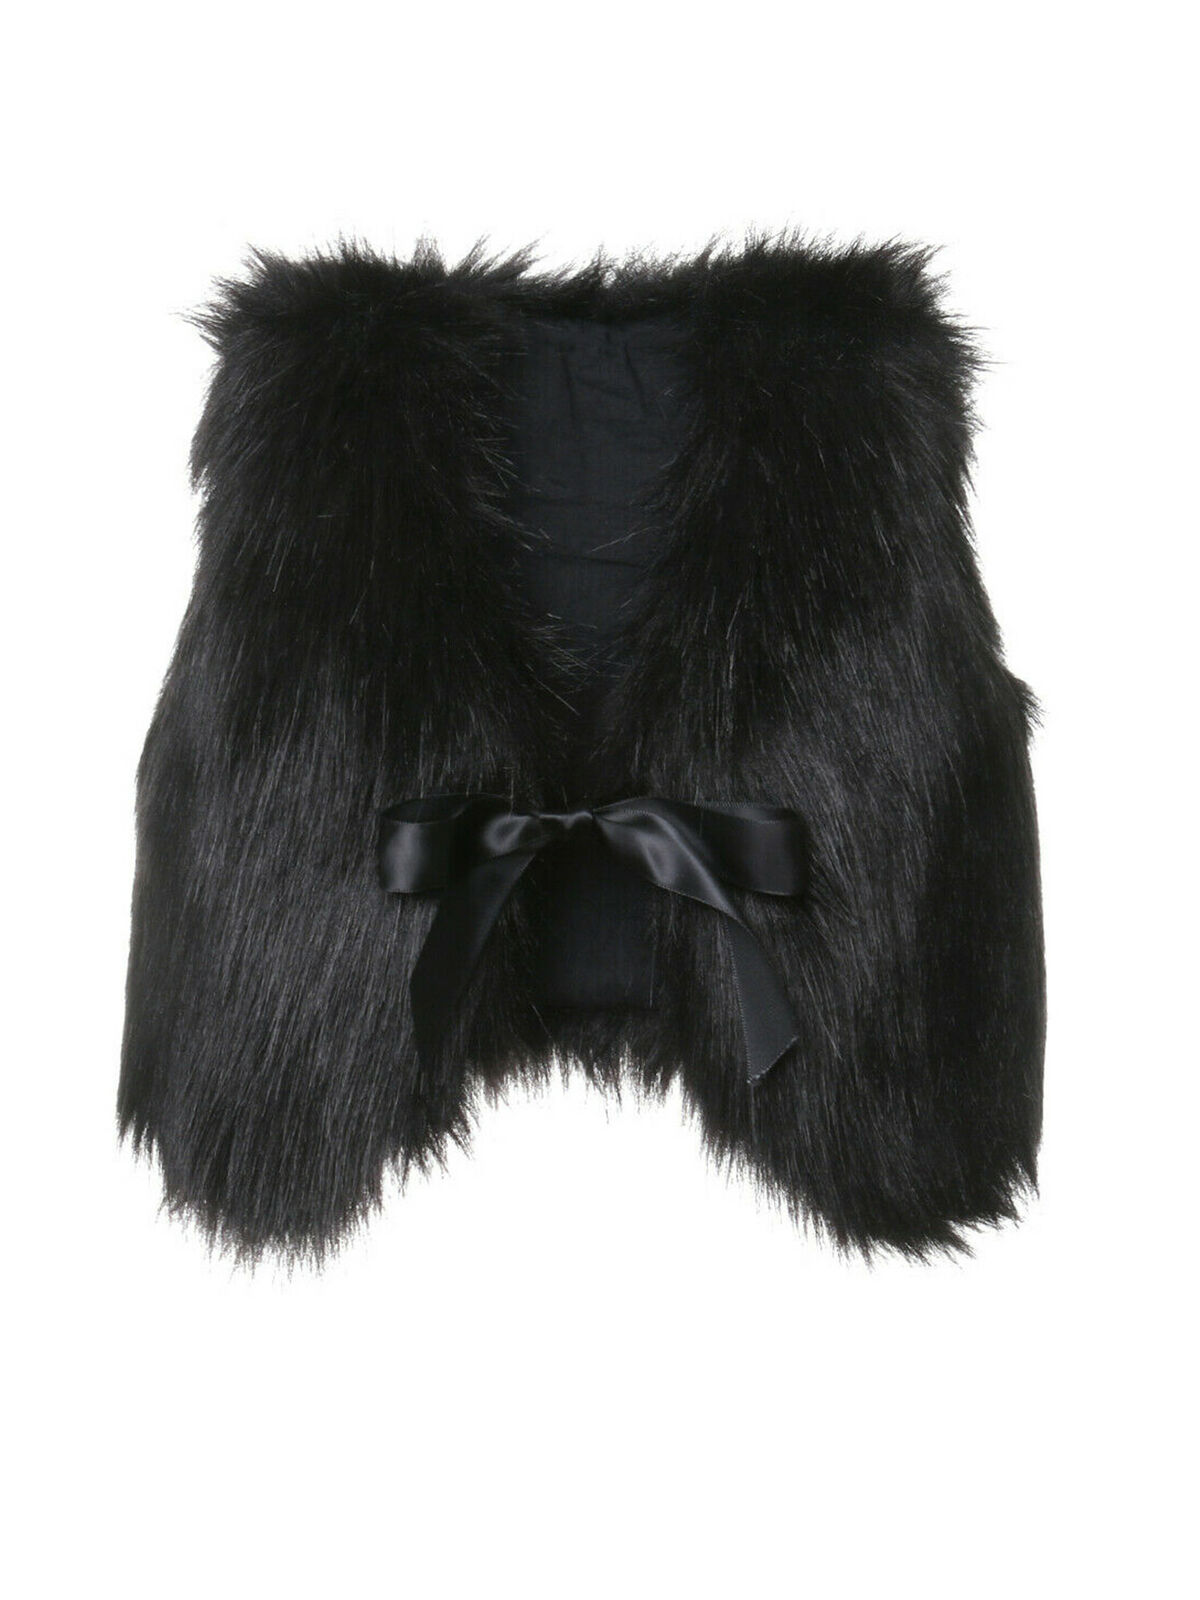 Wsevypo Kids Baby Girls Faux Fur Vest Waistcoat Child Warm Winter Sleeveless Coat Outwear Jacket - image 1 of 6